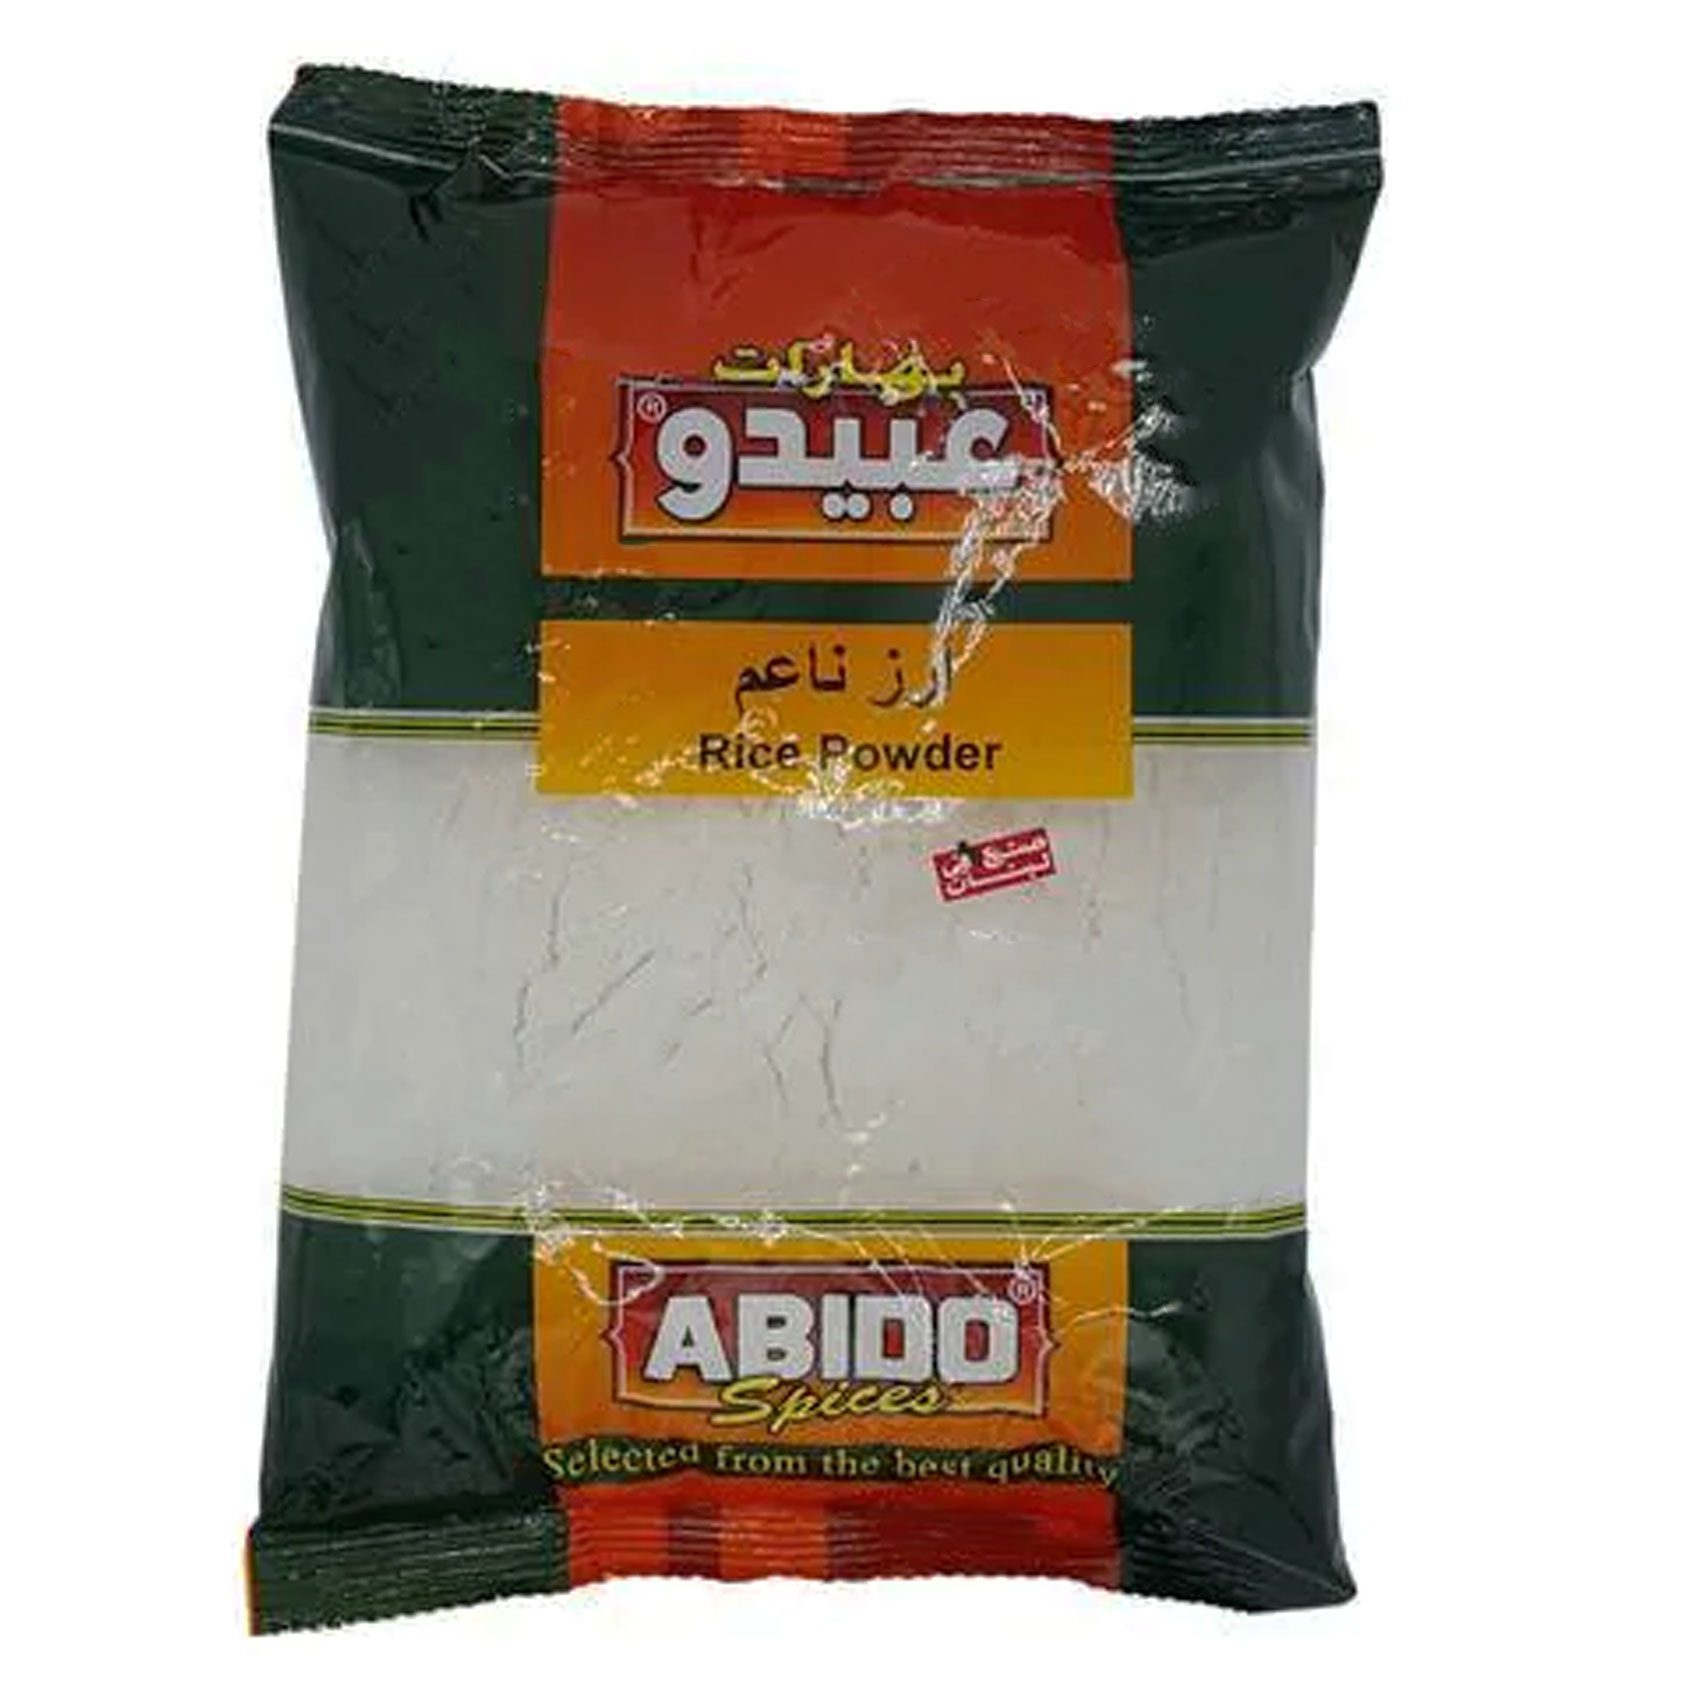 Abido Spice Rice Powder 500G